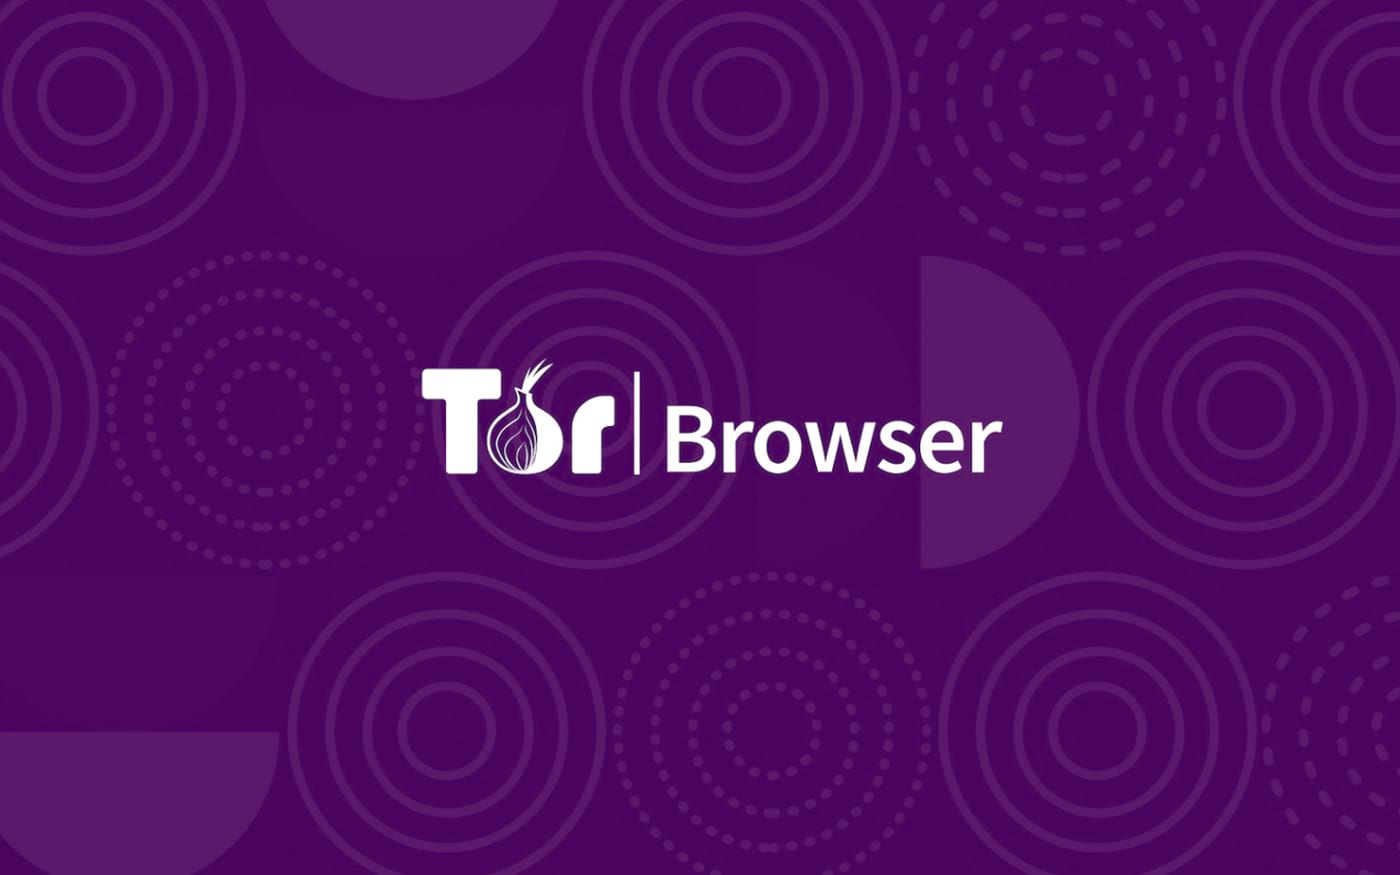 Download free tor browser for android hyrda все ссылки на гидру онион linkshophydra